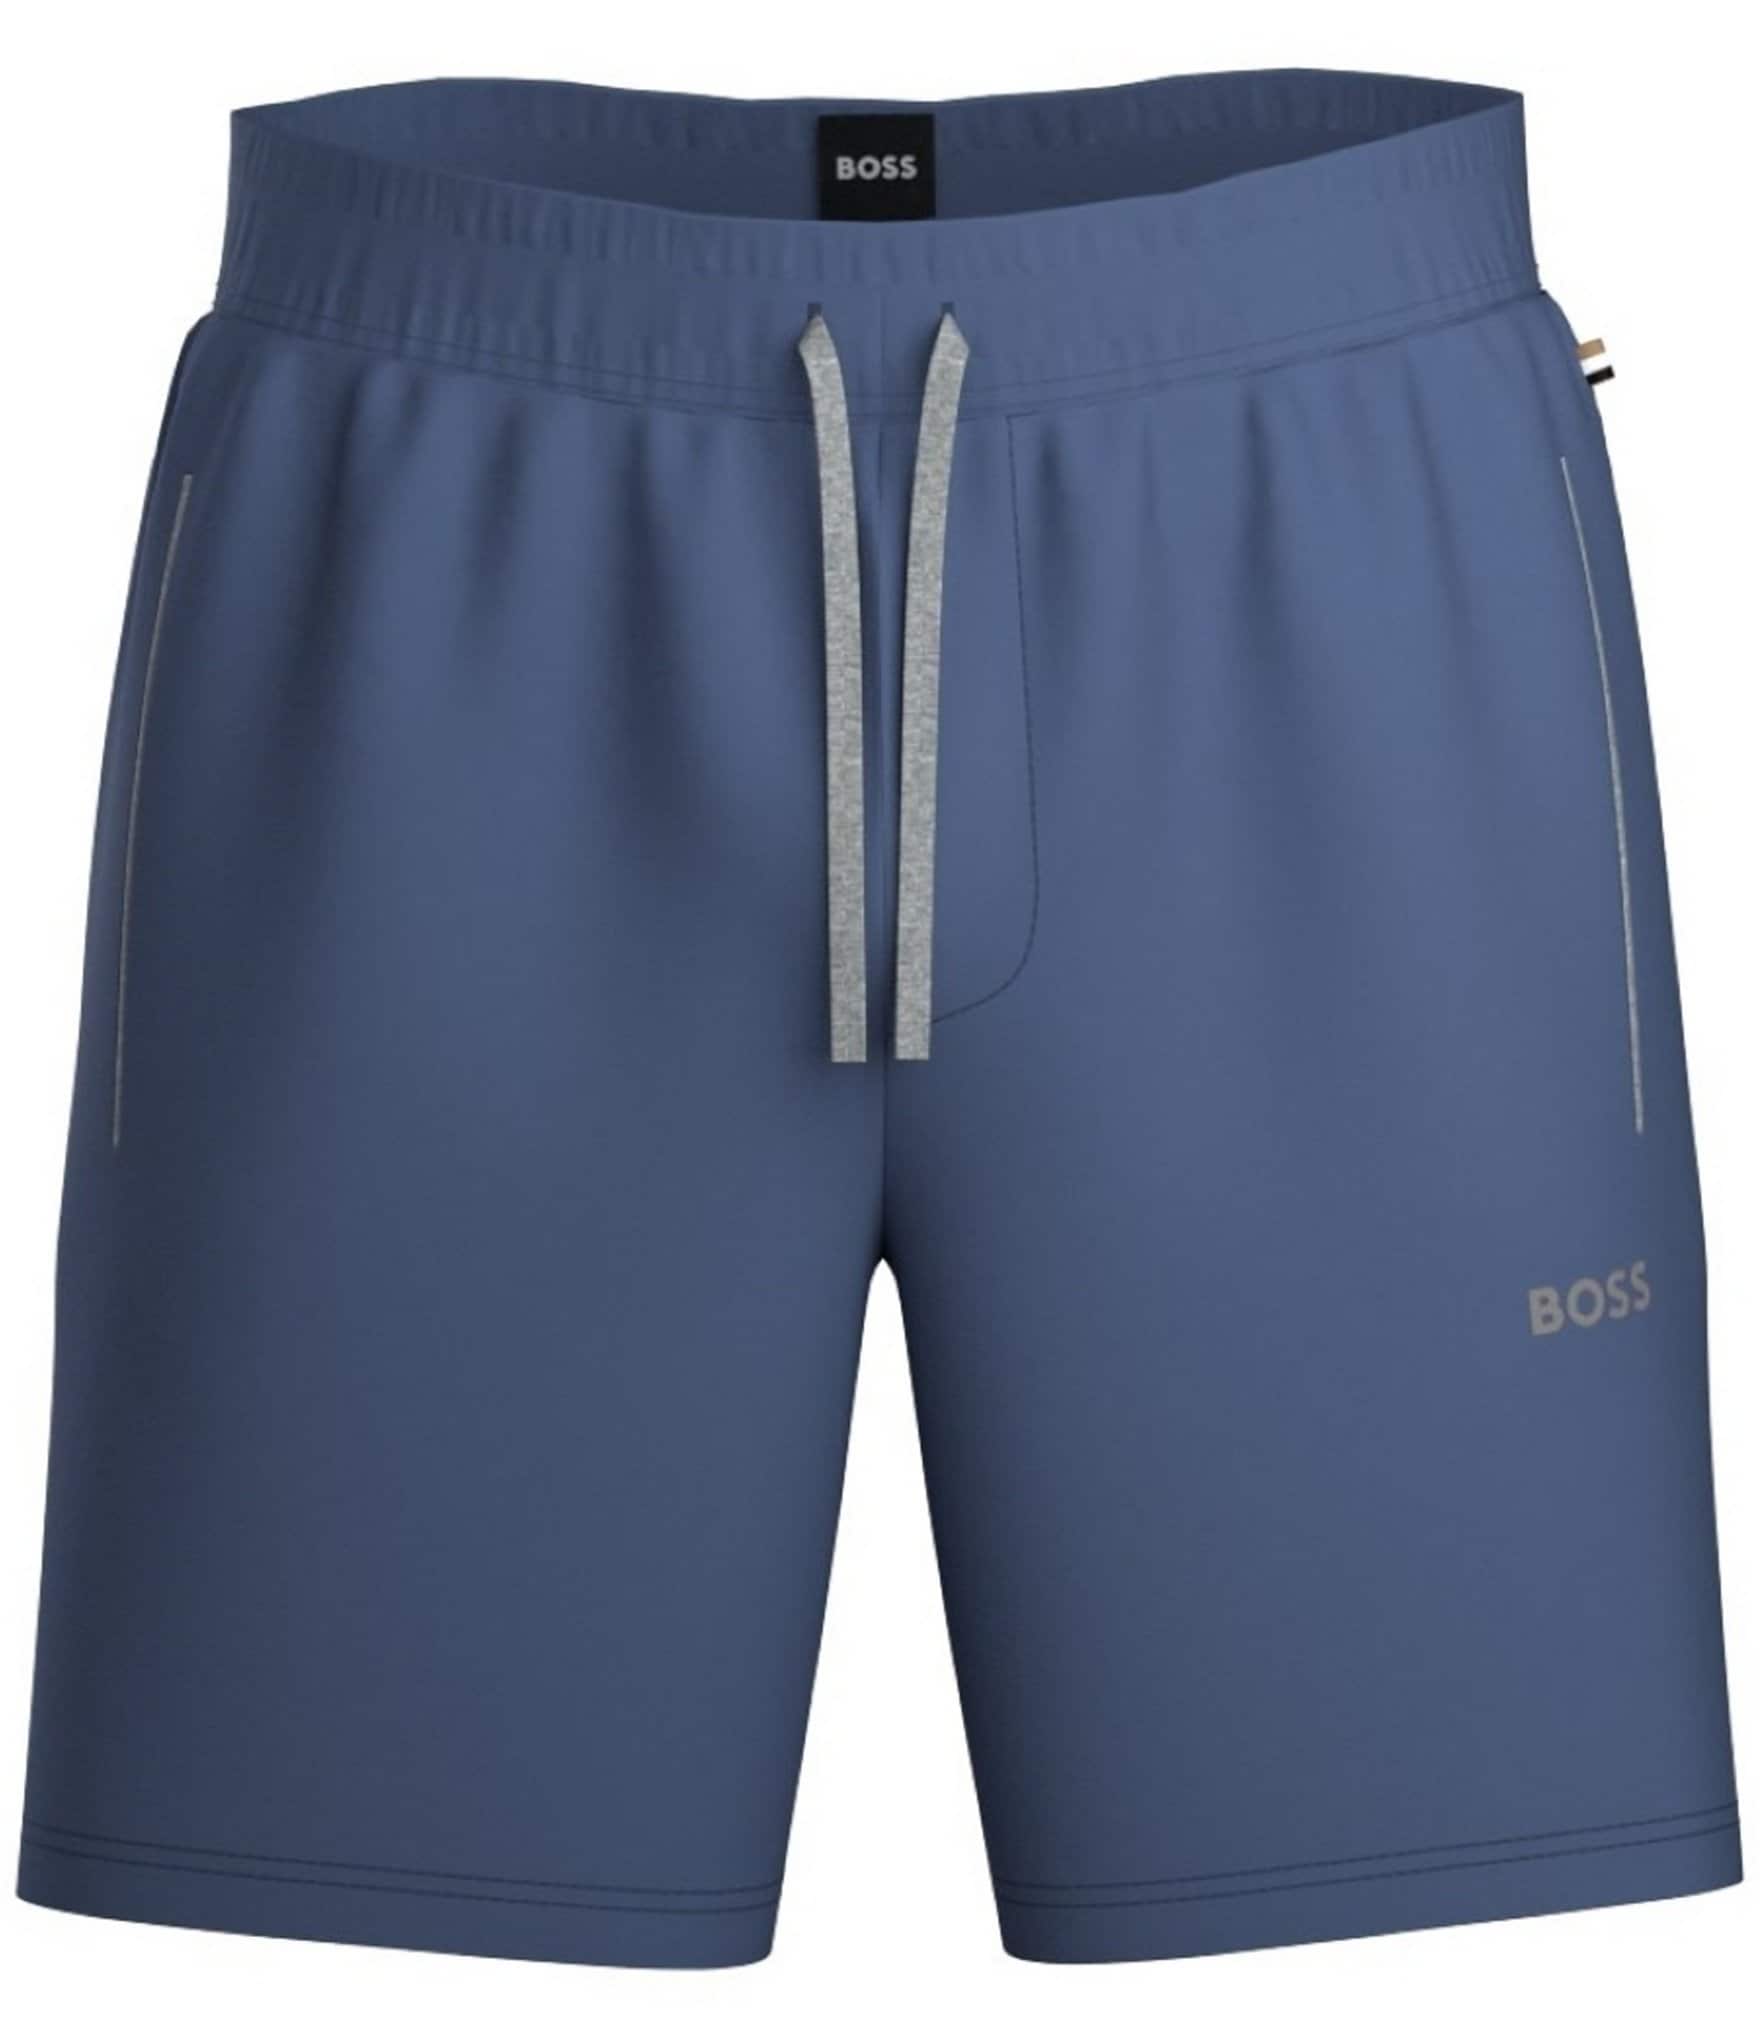 Polo Ralph Lauren 9.5 Inseam Fleece Shorts